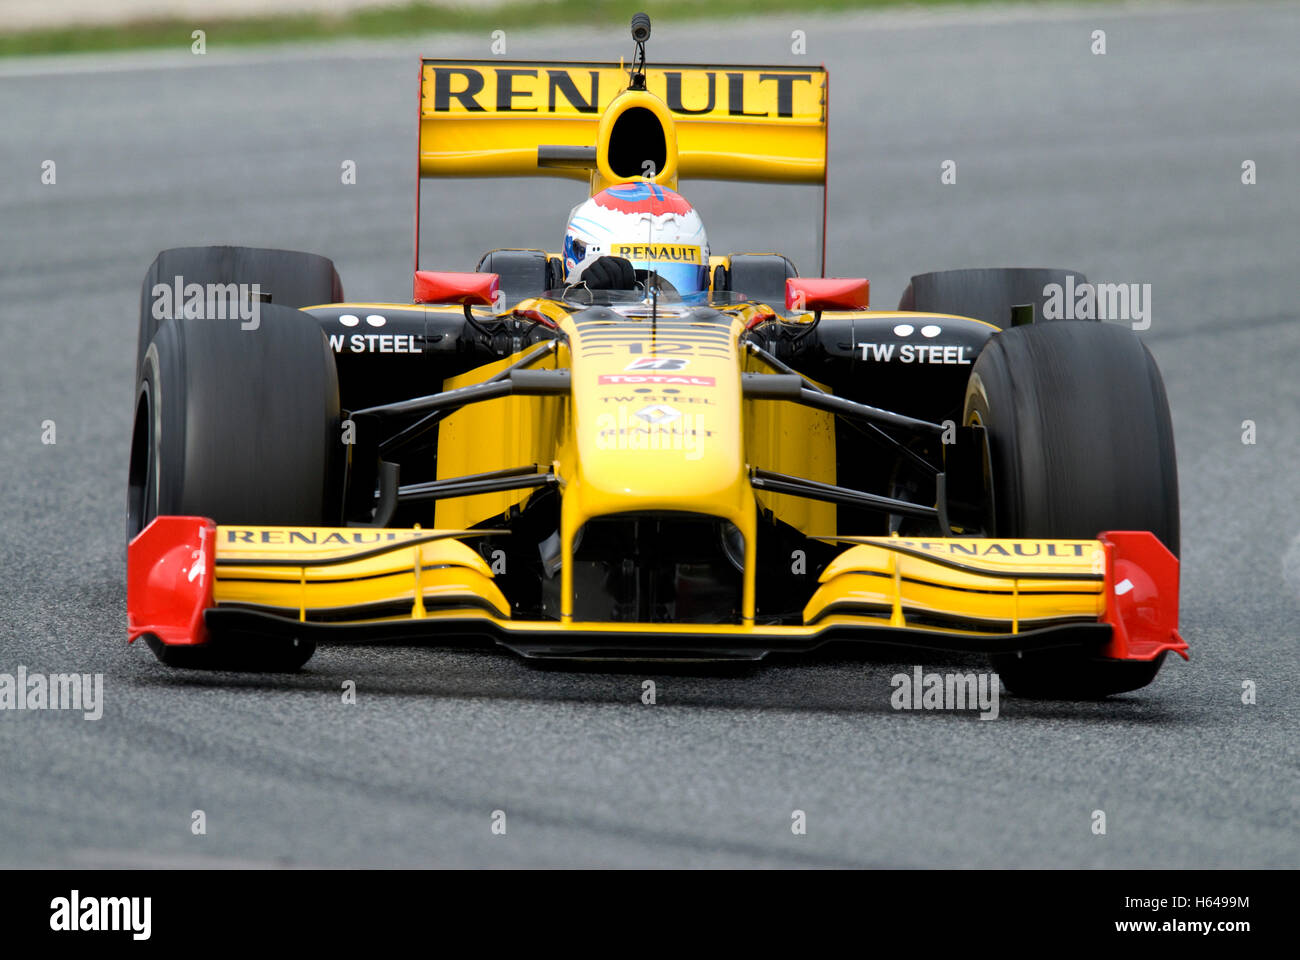 Motorsport, Vitaly Petrov, RUS, im Renault R30 Rennwagen, Formel-1-Tests auf dem Circuit de Catalunya Rennen verfolgen in Stockfoto